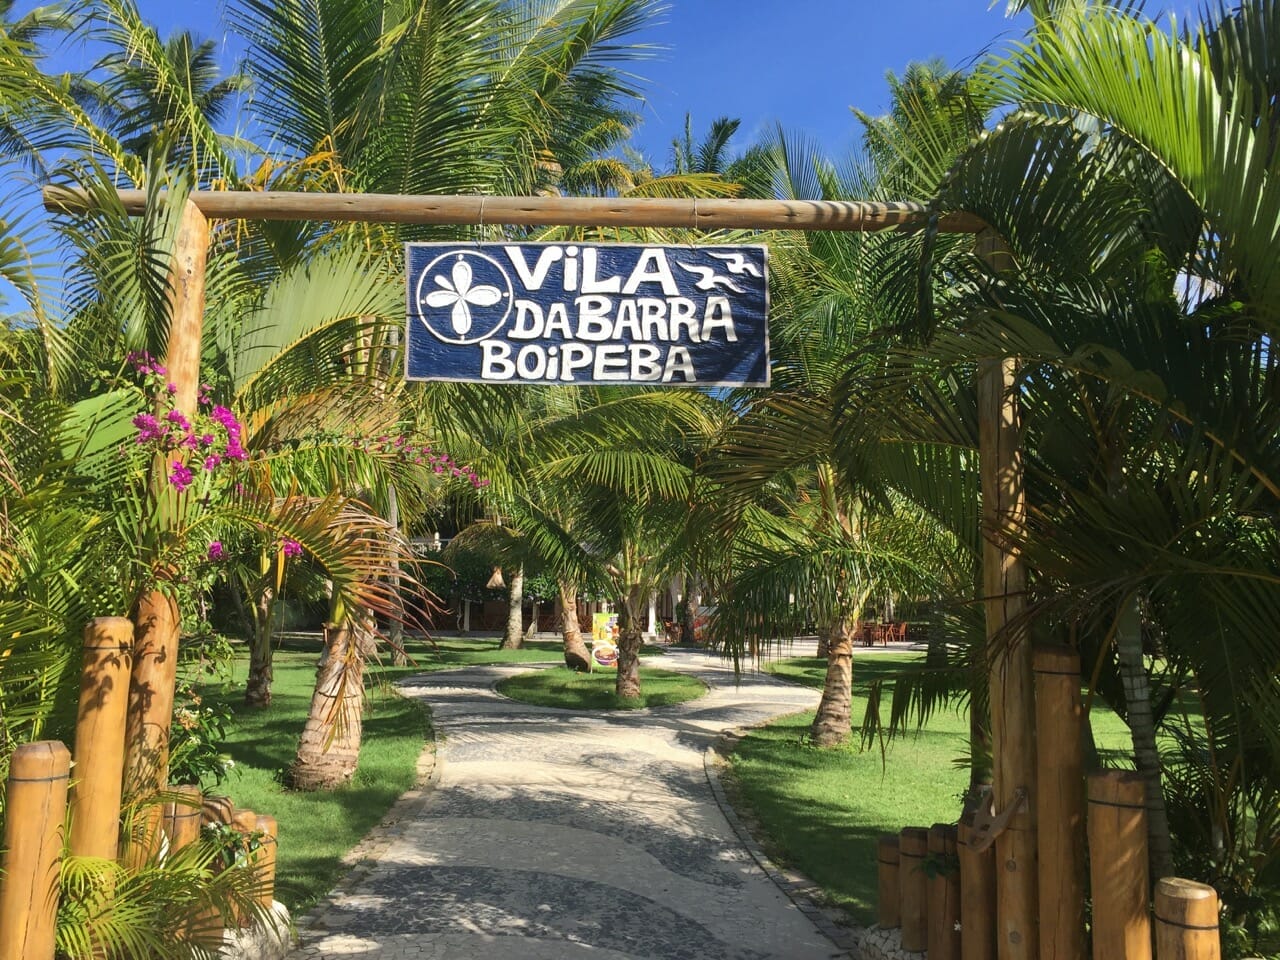 The entrance of Vila da Barra, which is surrounded by coconut tress, Boipeba Island, Bahia, Brazil